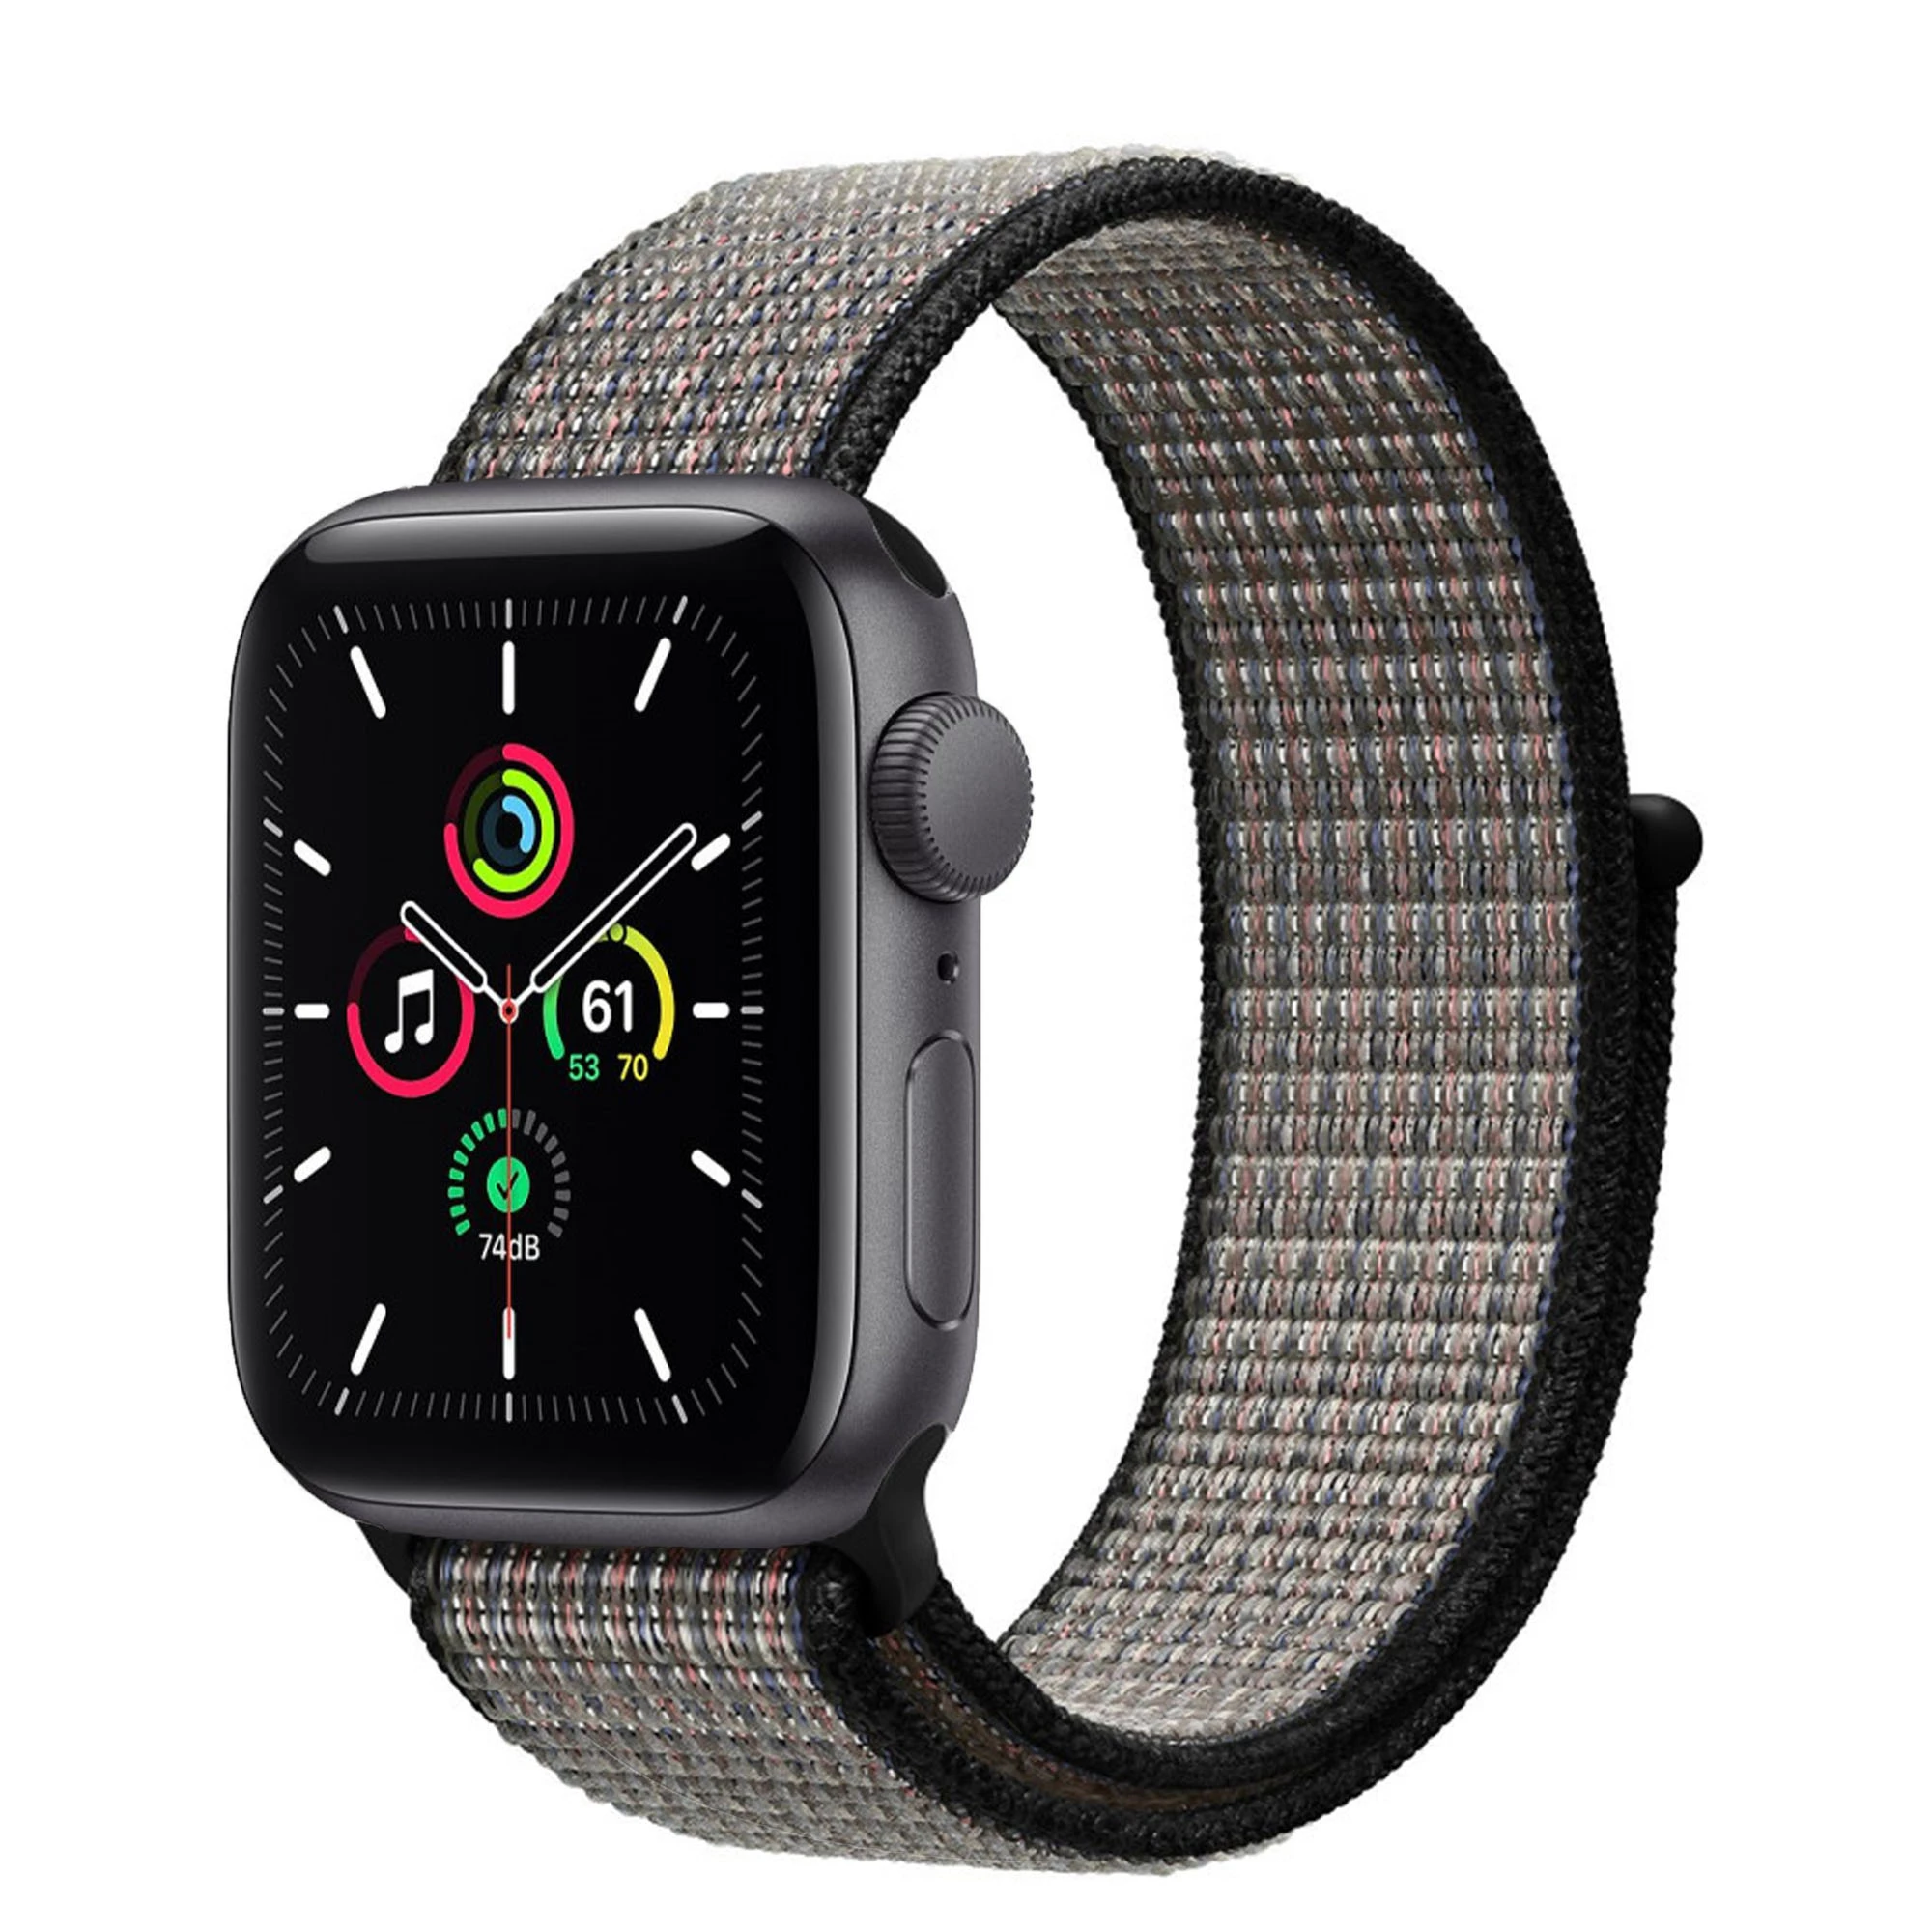 Apple Watch SE Nike GPS 40mm Space Gray Aluminum Case (MYYM2) with Black Nike Sport Loop (MX7Y2)